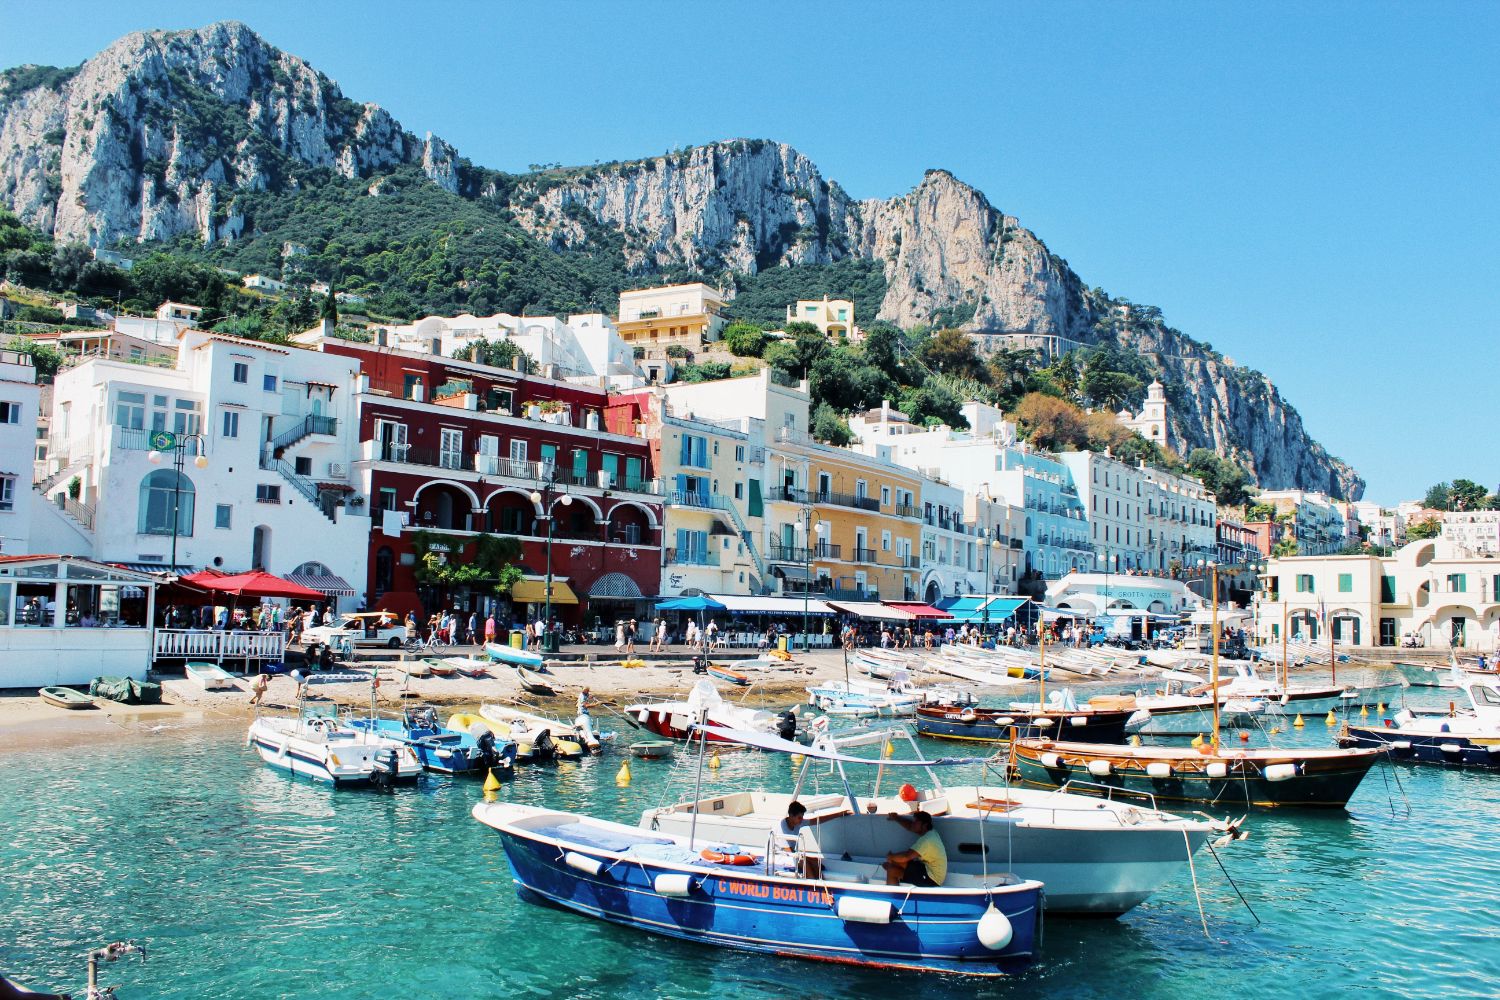 Things to do in Capri